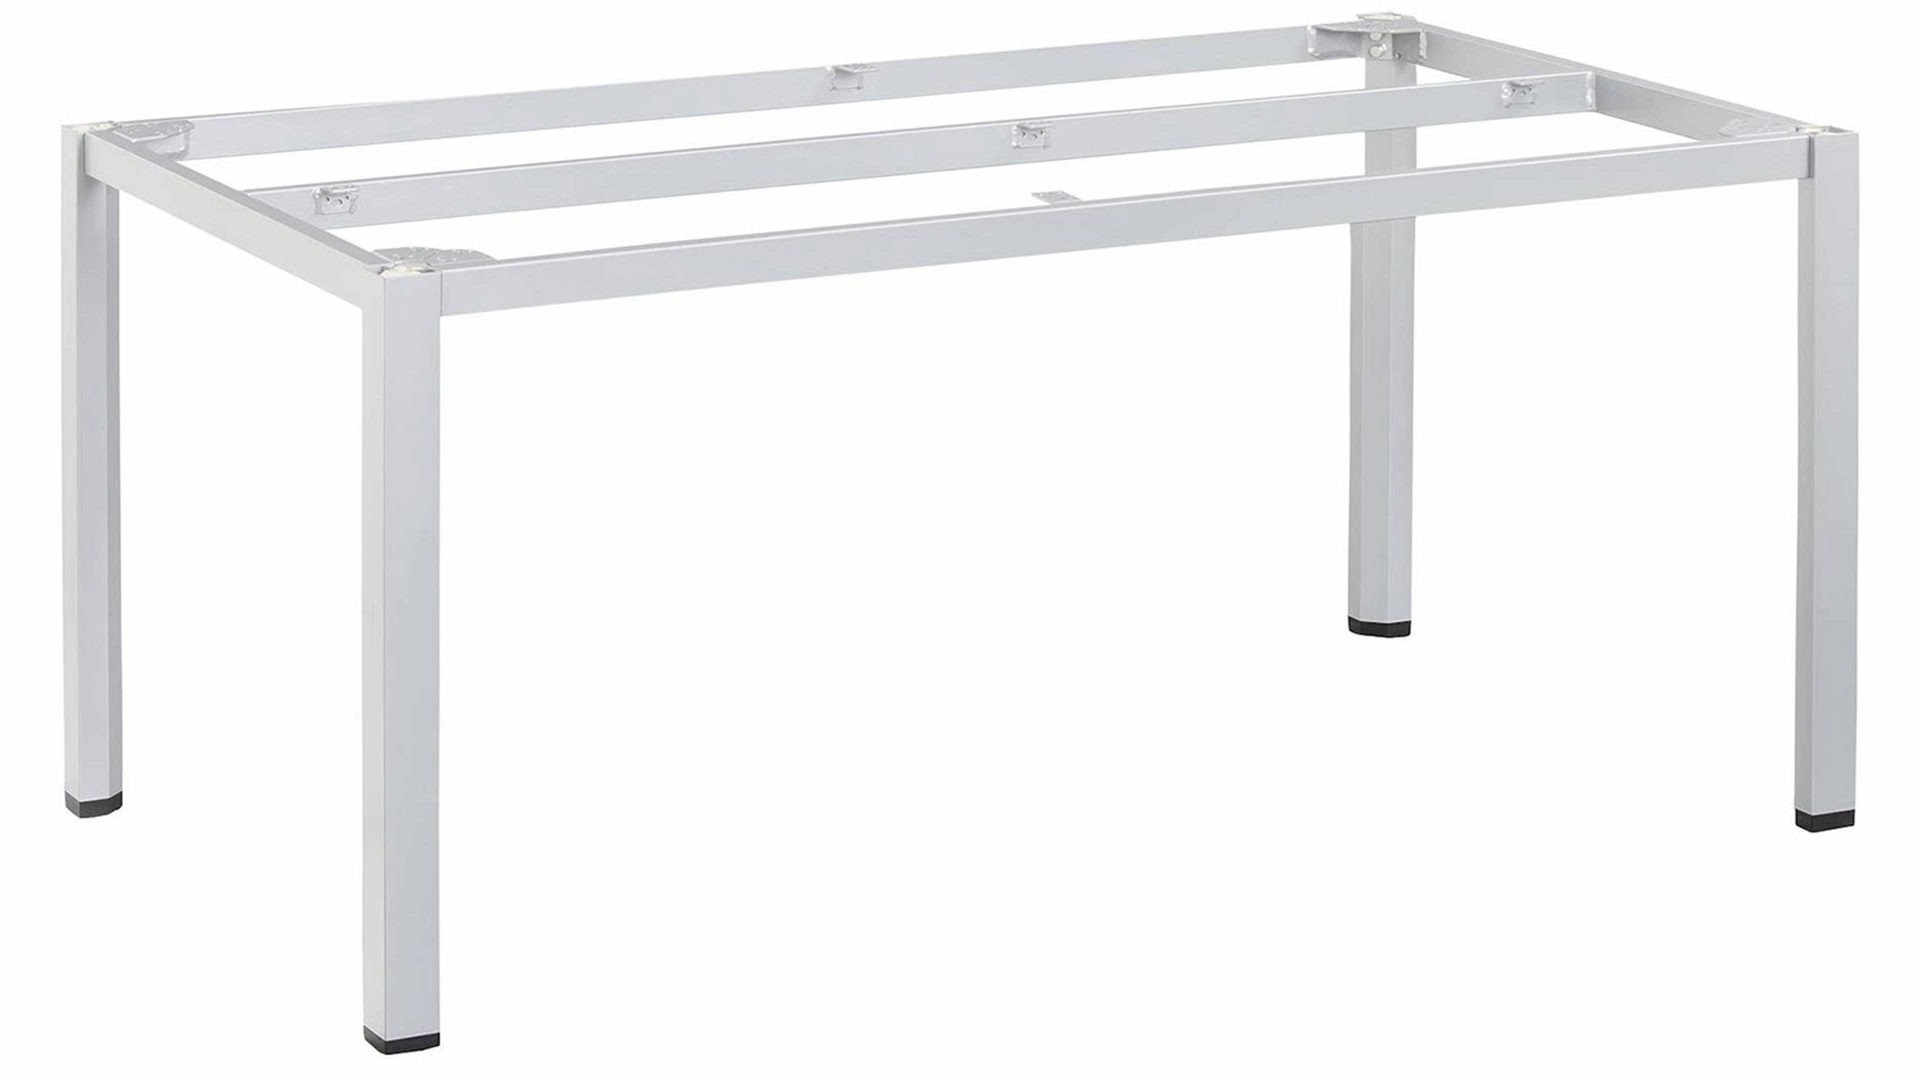 Gartentisch Kettler aus Metall in Silber KETTLER Tischsystem Cubic - Tischgestell silberfarbenes Aluminium - ca. 160 x 95 cm